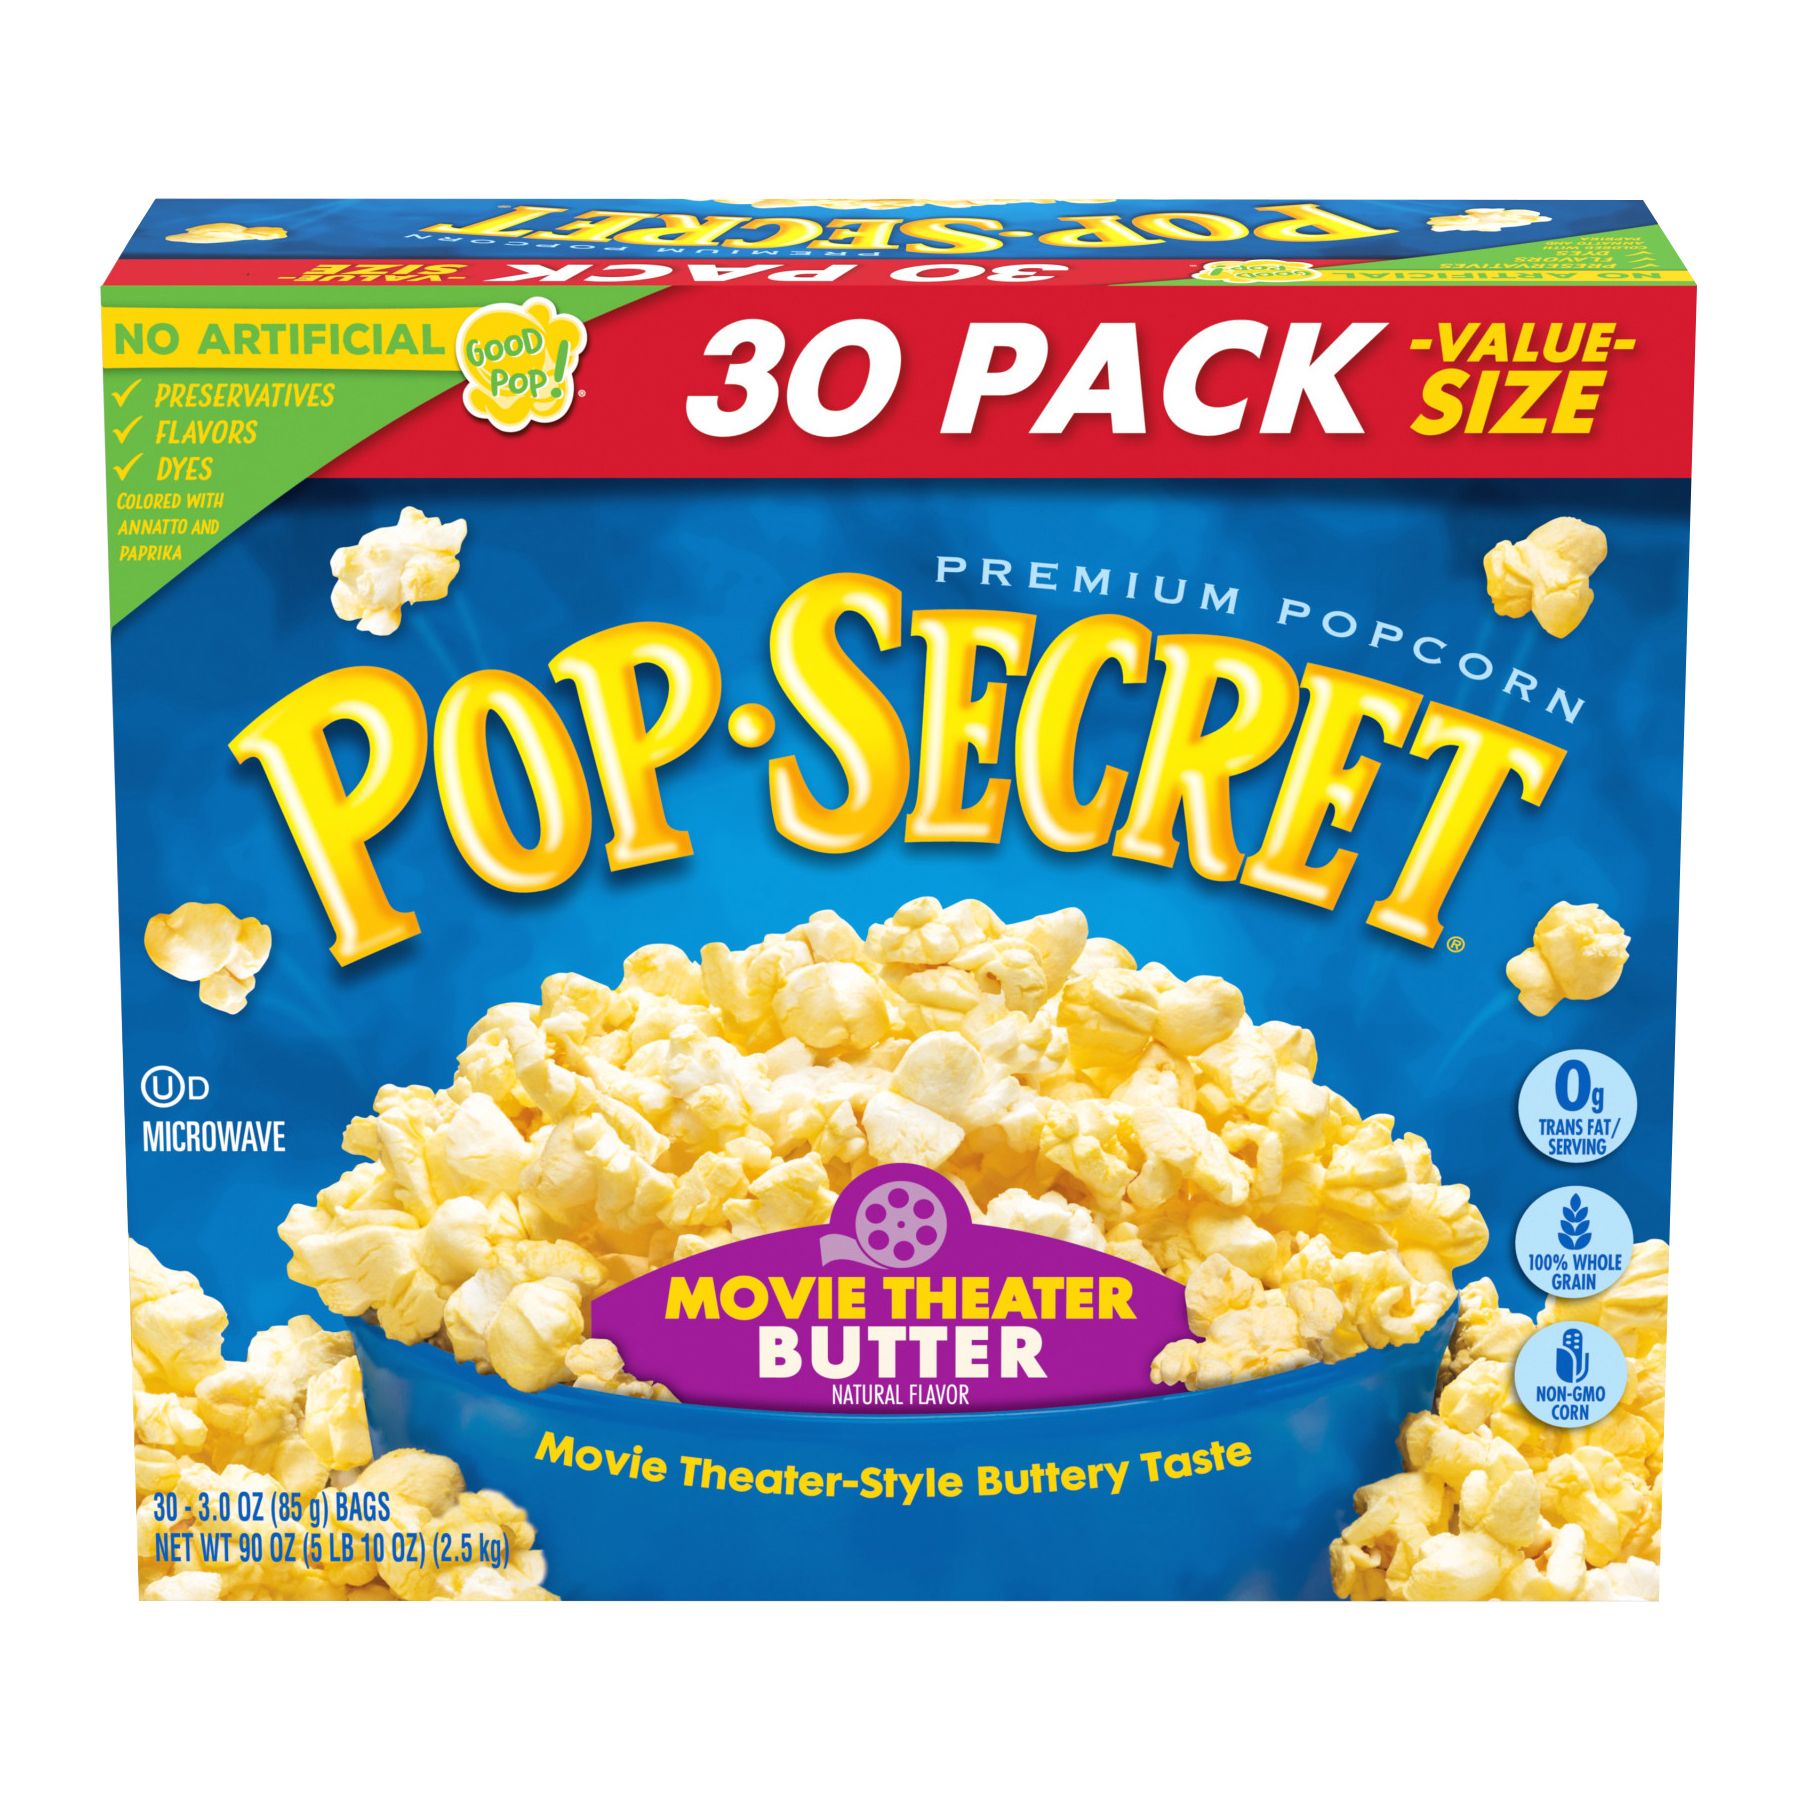  Popcorn Stop Fresh Heat Sealed Bags of Butter Popcorn